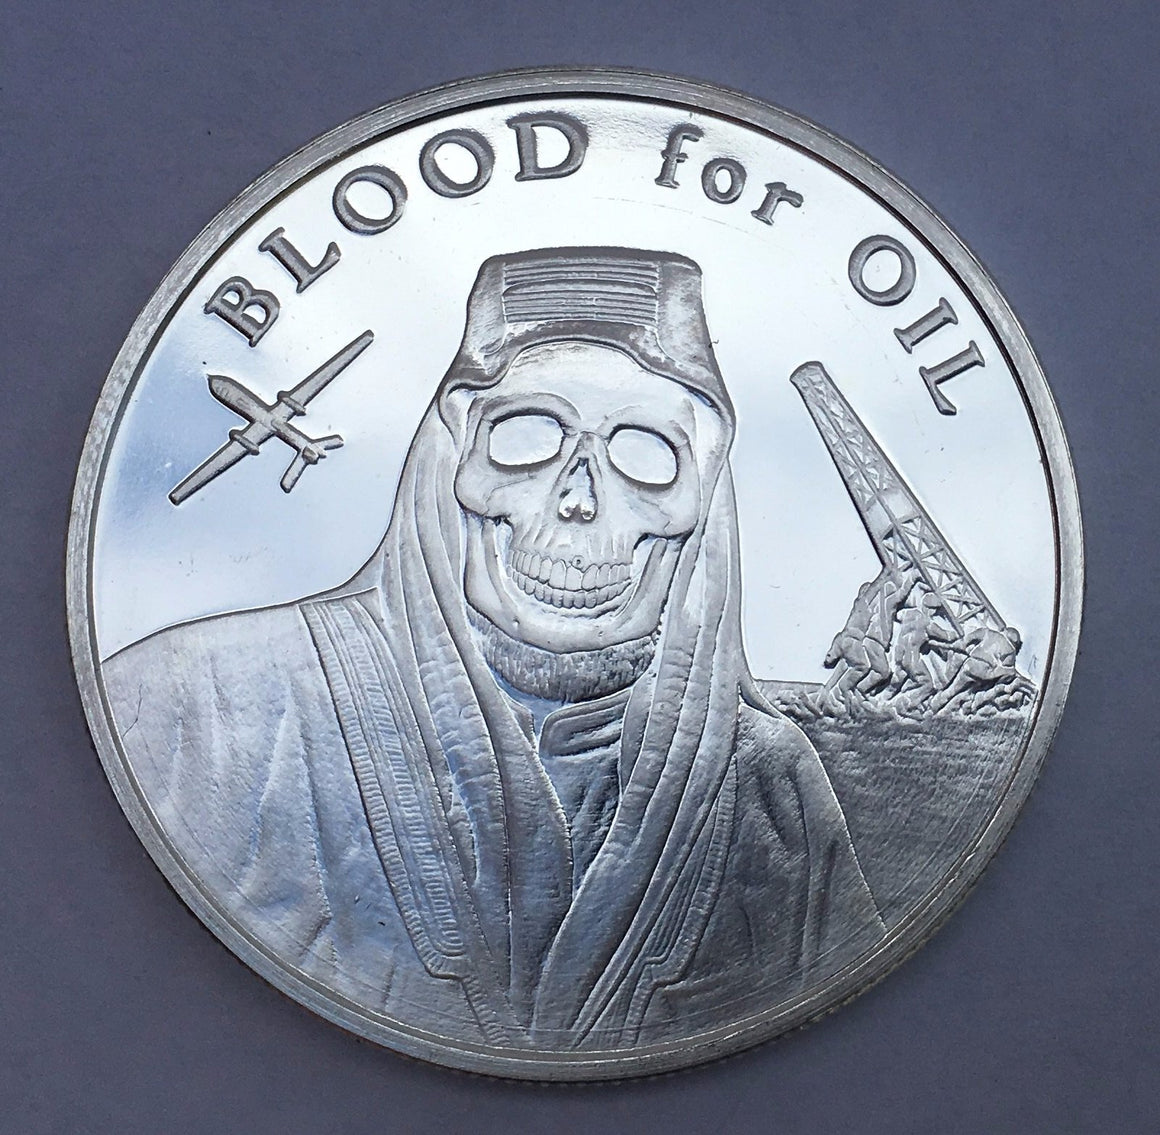 Blood for Oil by Silver Shield, Mini Mintage - BU 1 oz .999 Silver Round